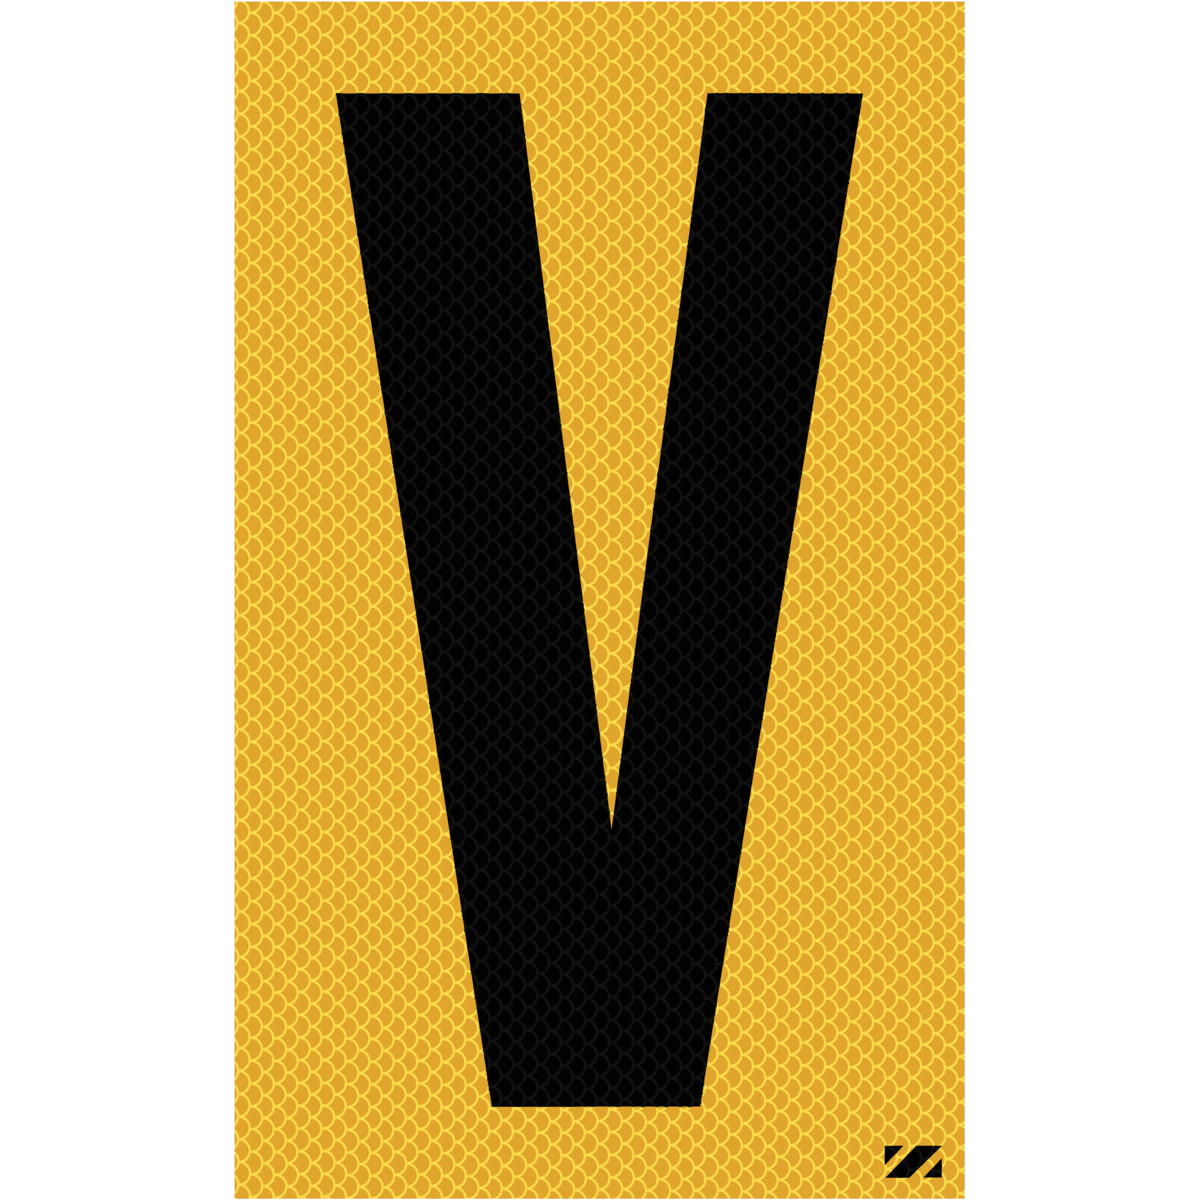 2.5" Black on Yellow High Intensity Reflective "V"